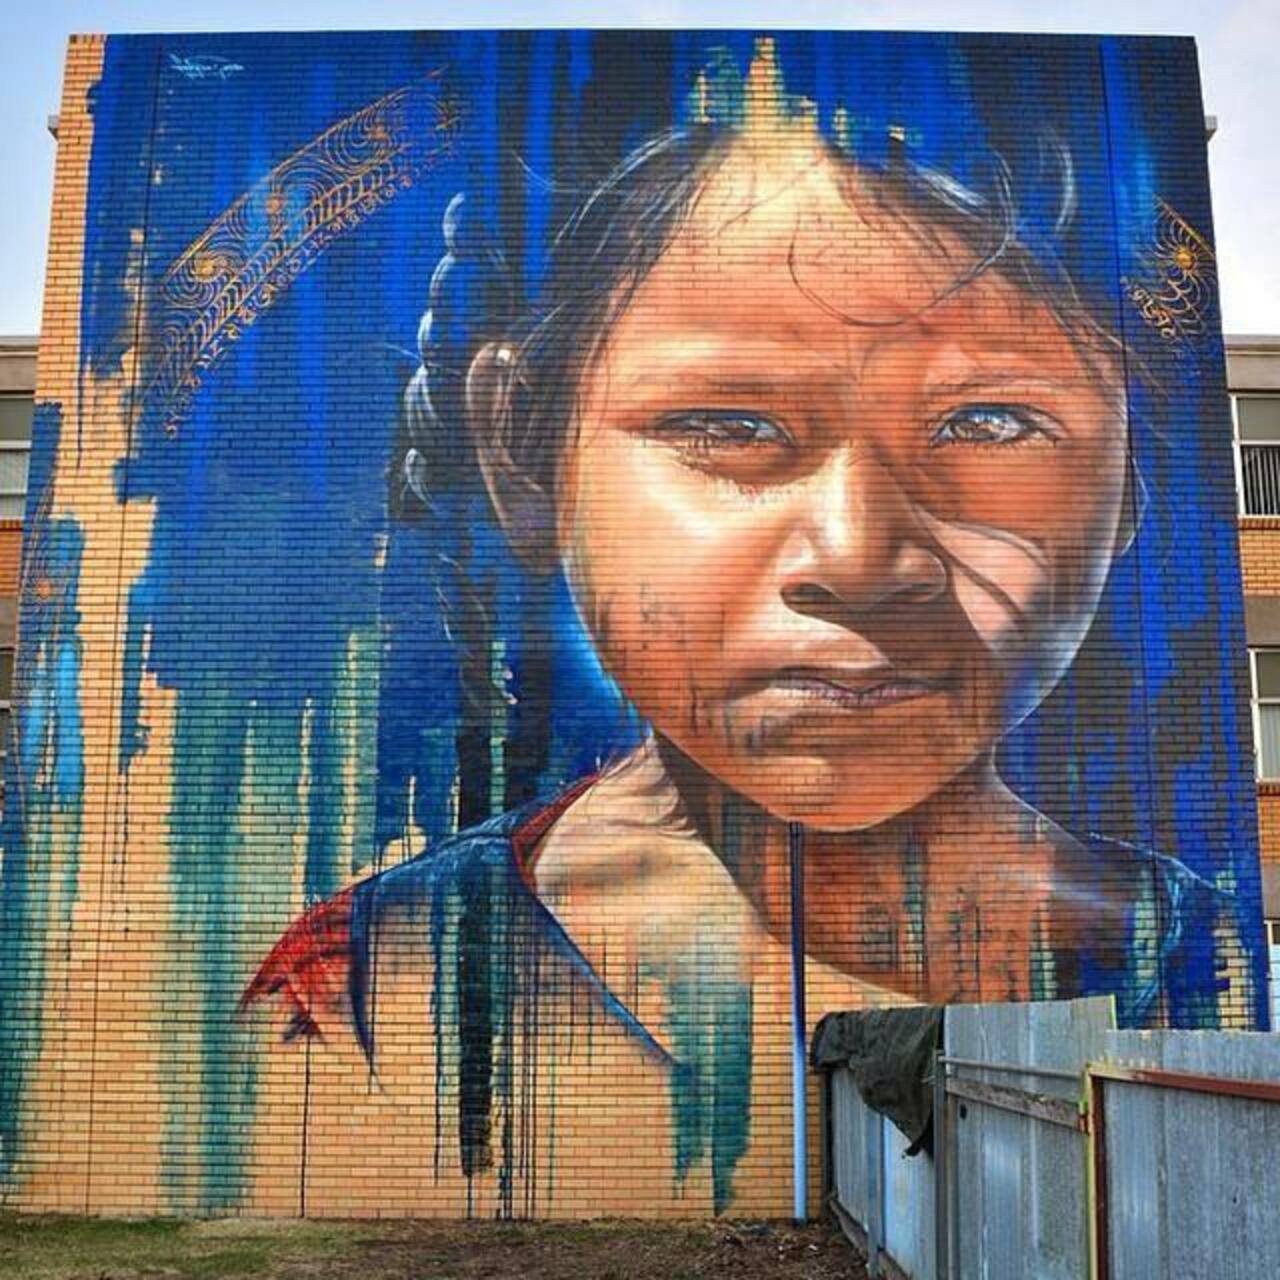 RT @SemaforoRoto: New Street Art by Matt Adnate in Victoria, Australia 

#art #arte #graffiti #streetart http://t.co/pa8WQHa2GK